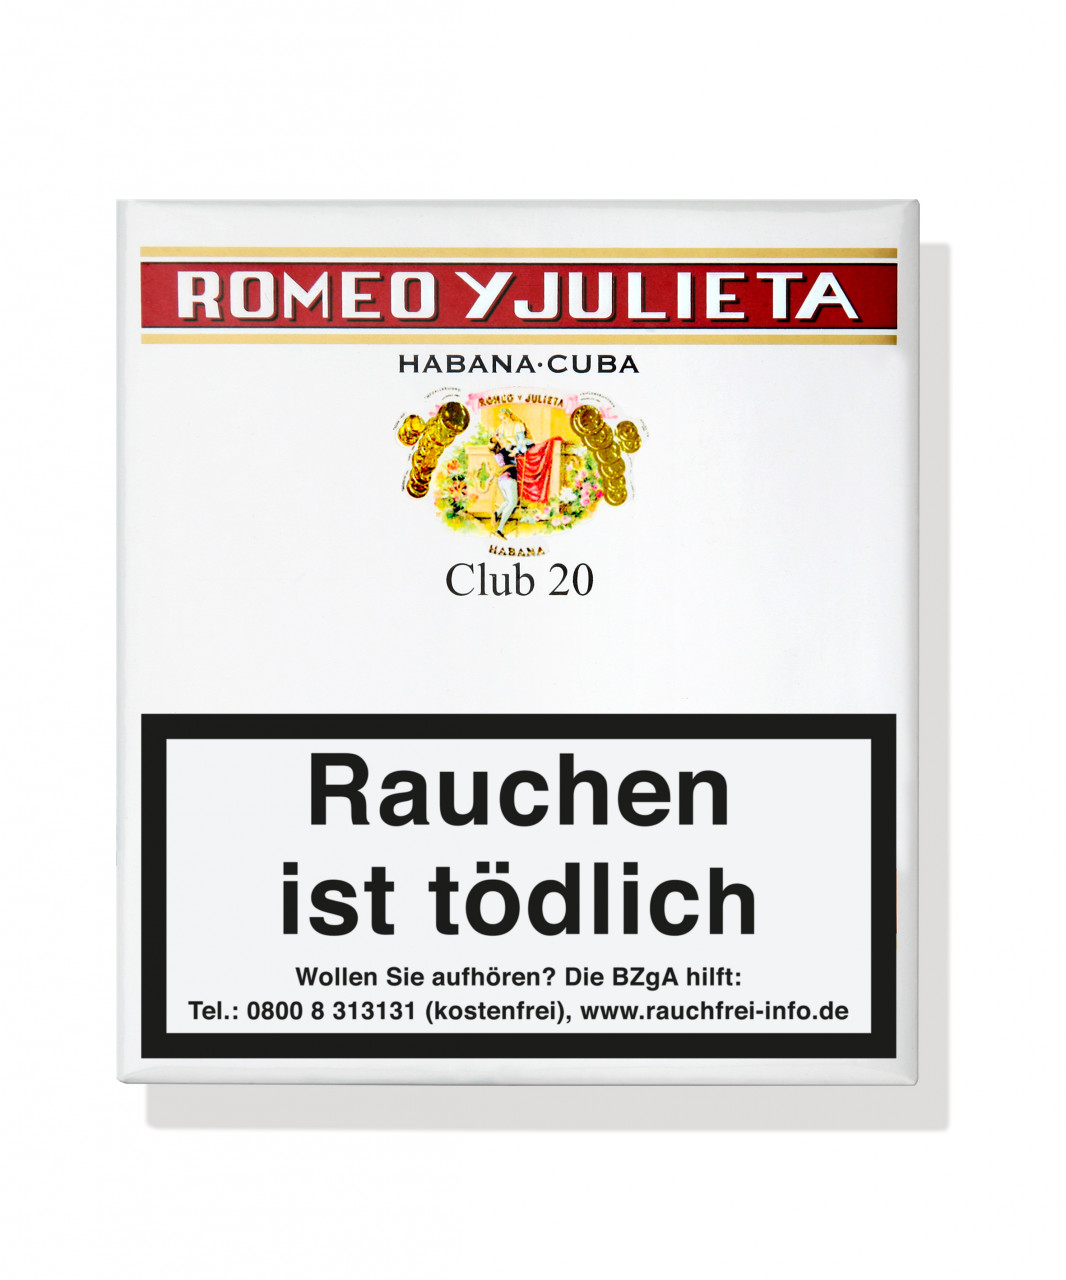 Romeo y Julieta Club